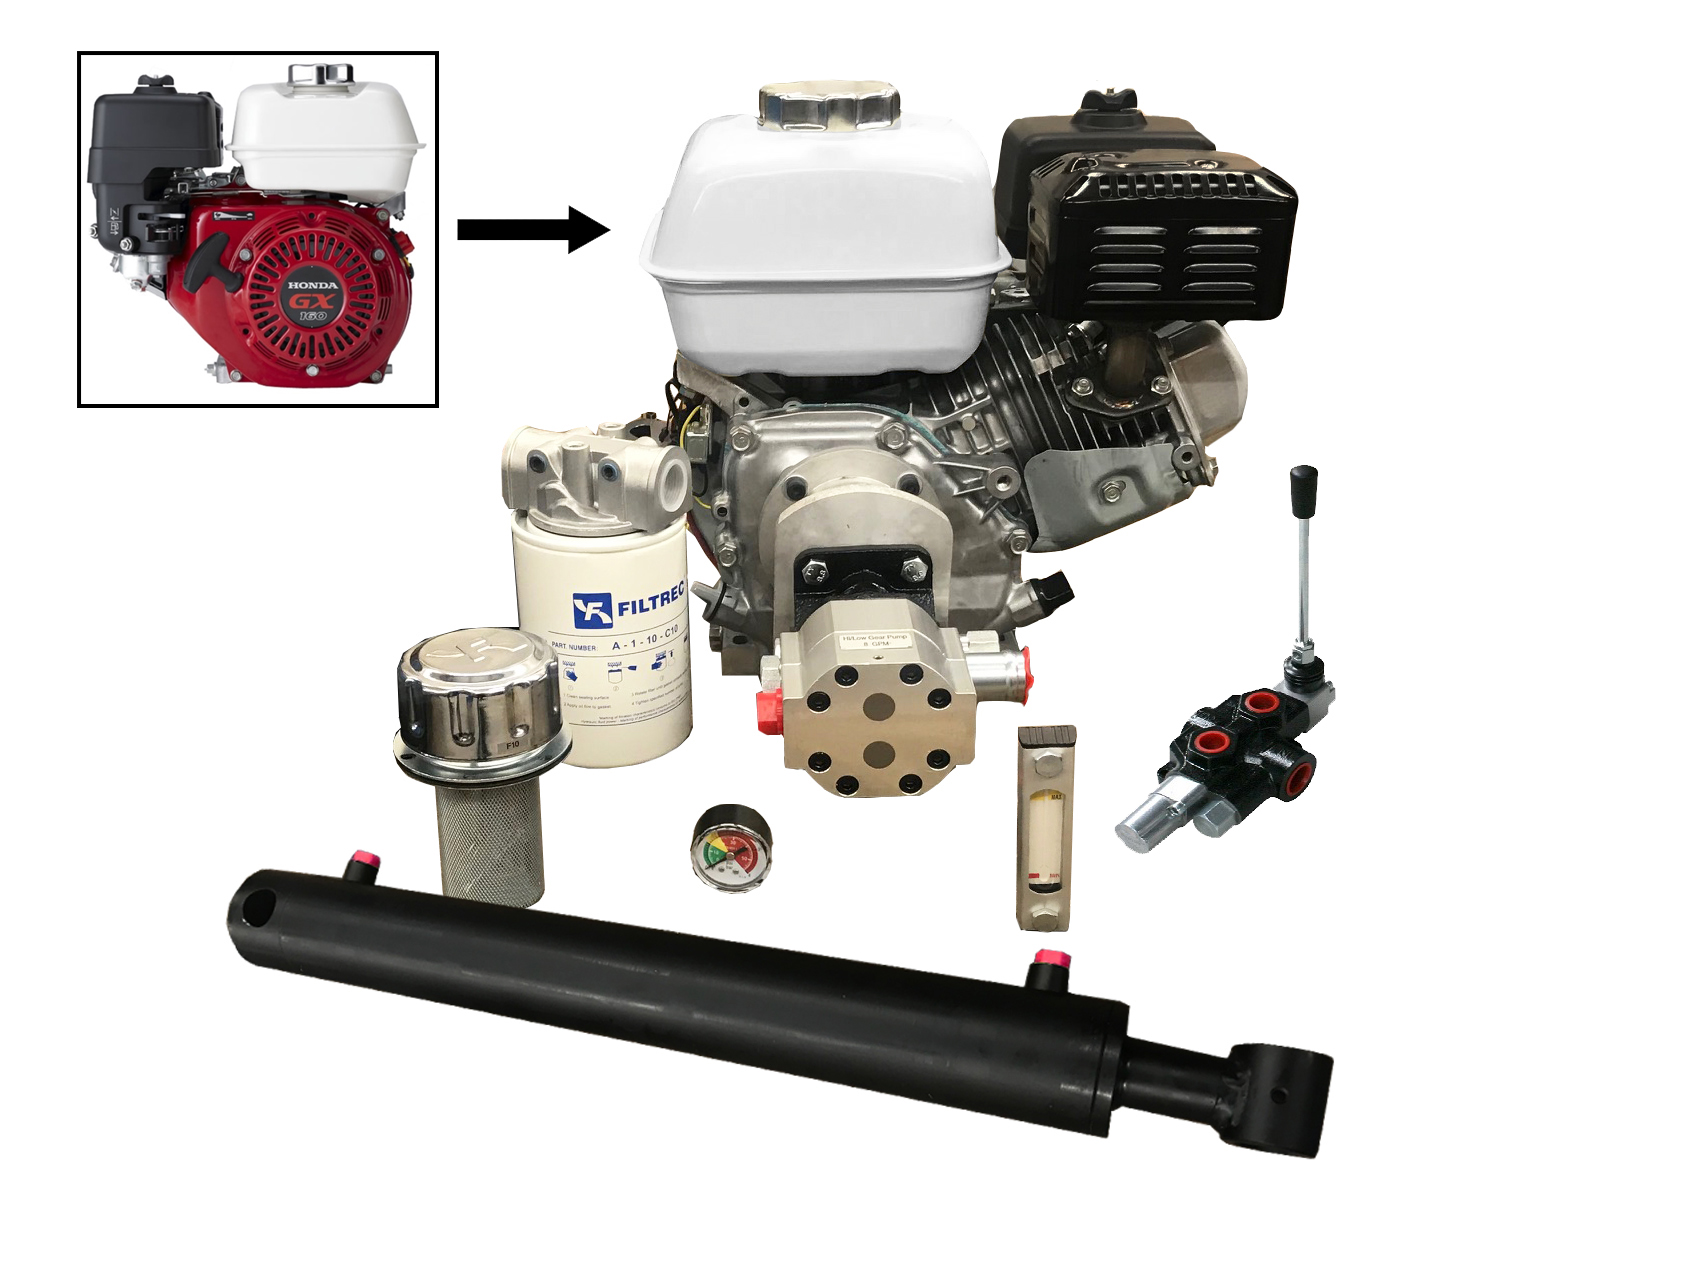 Log Splitter Kit With HONDA 5.5HP Engine, Incl. Flowfit Auto Kickout Lever Valve